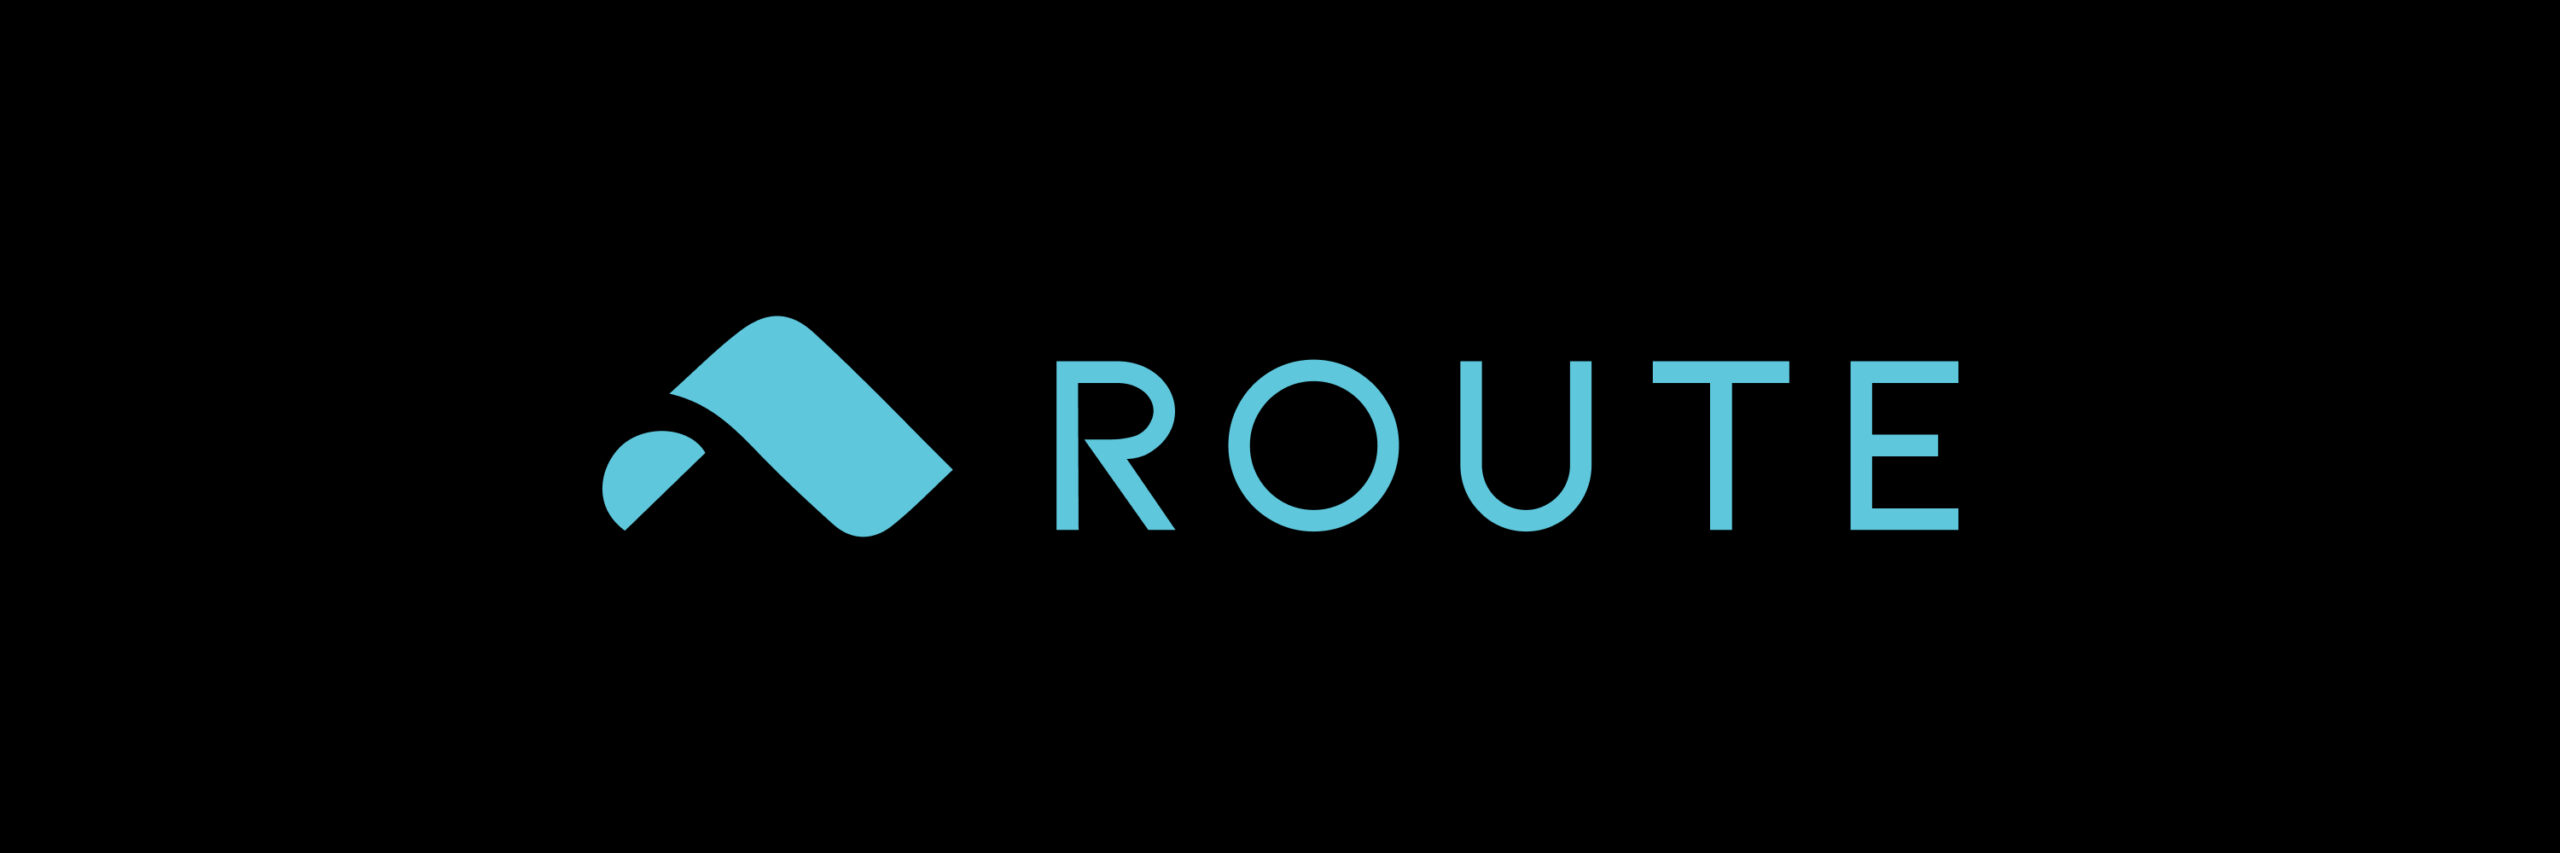 Blue route logo set against a black background